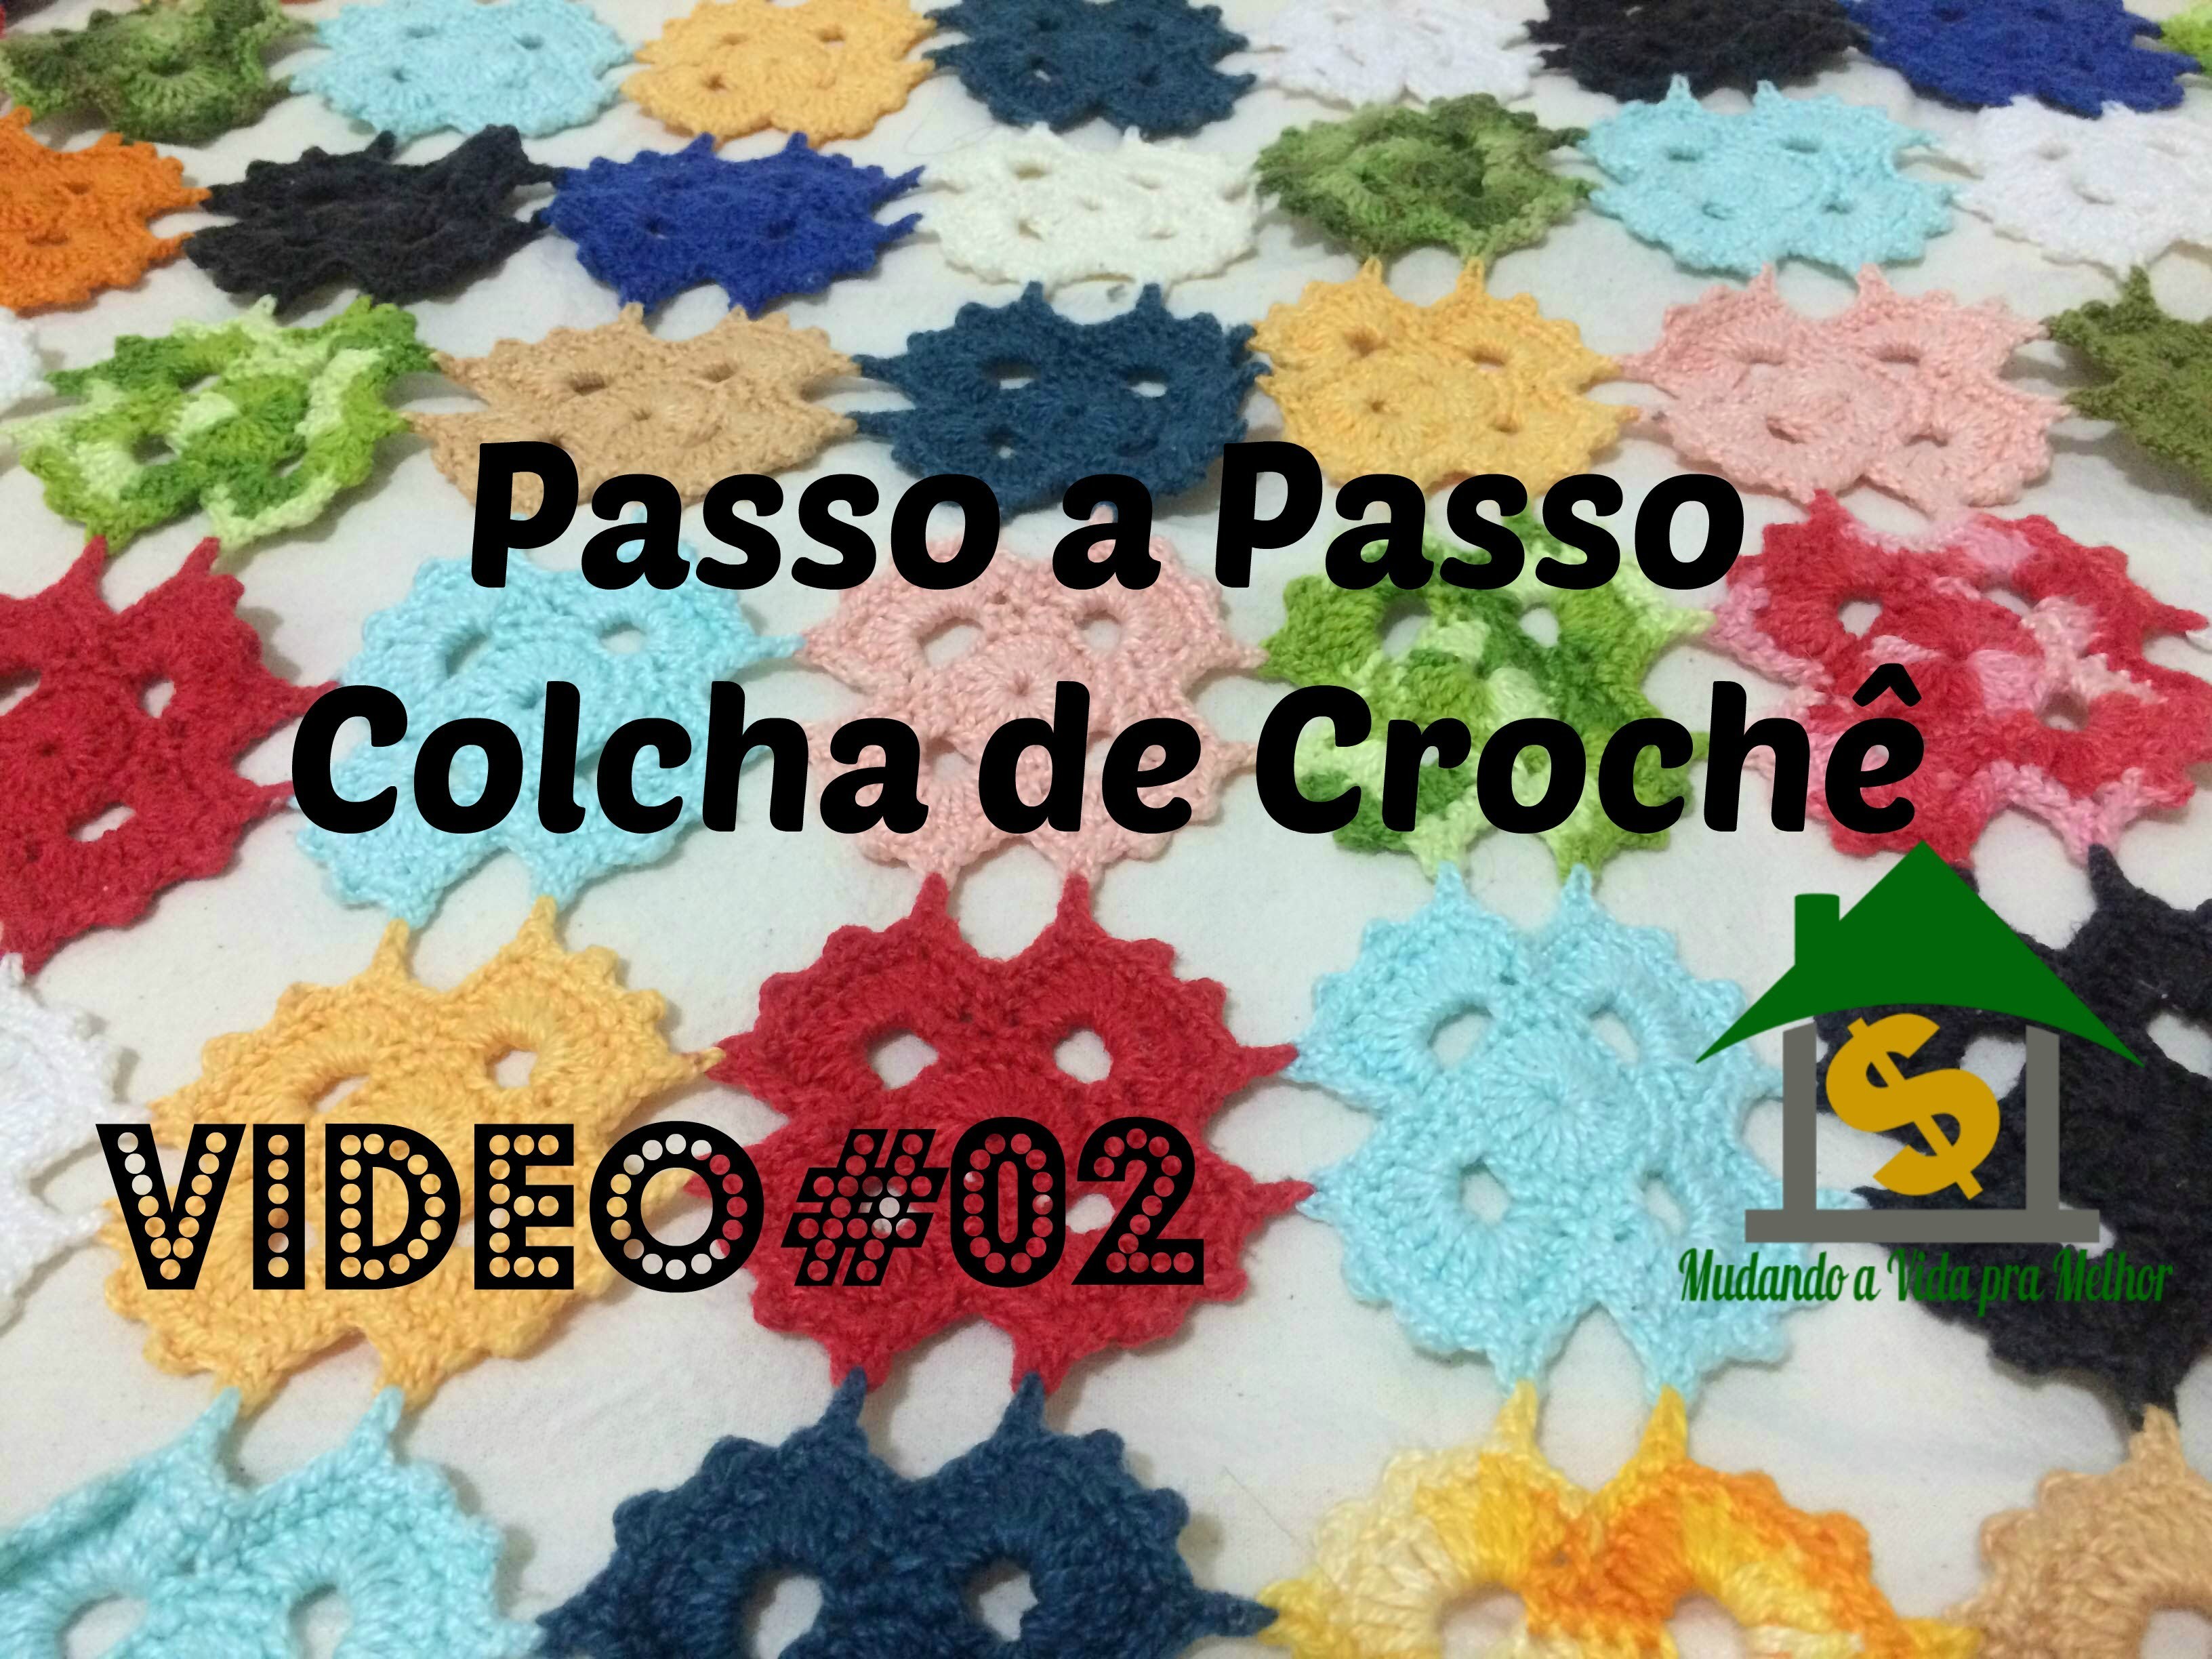 Colcha de Crochê Vídeo #02